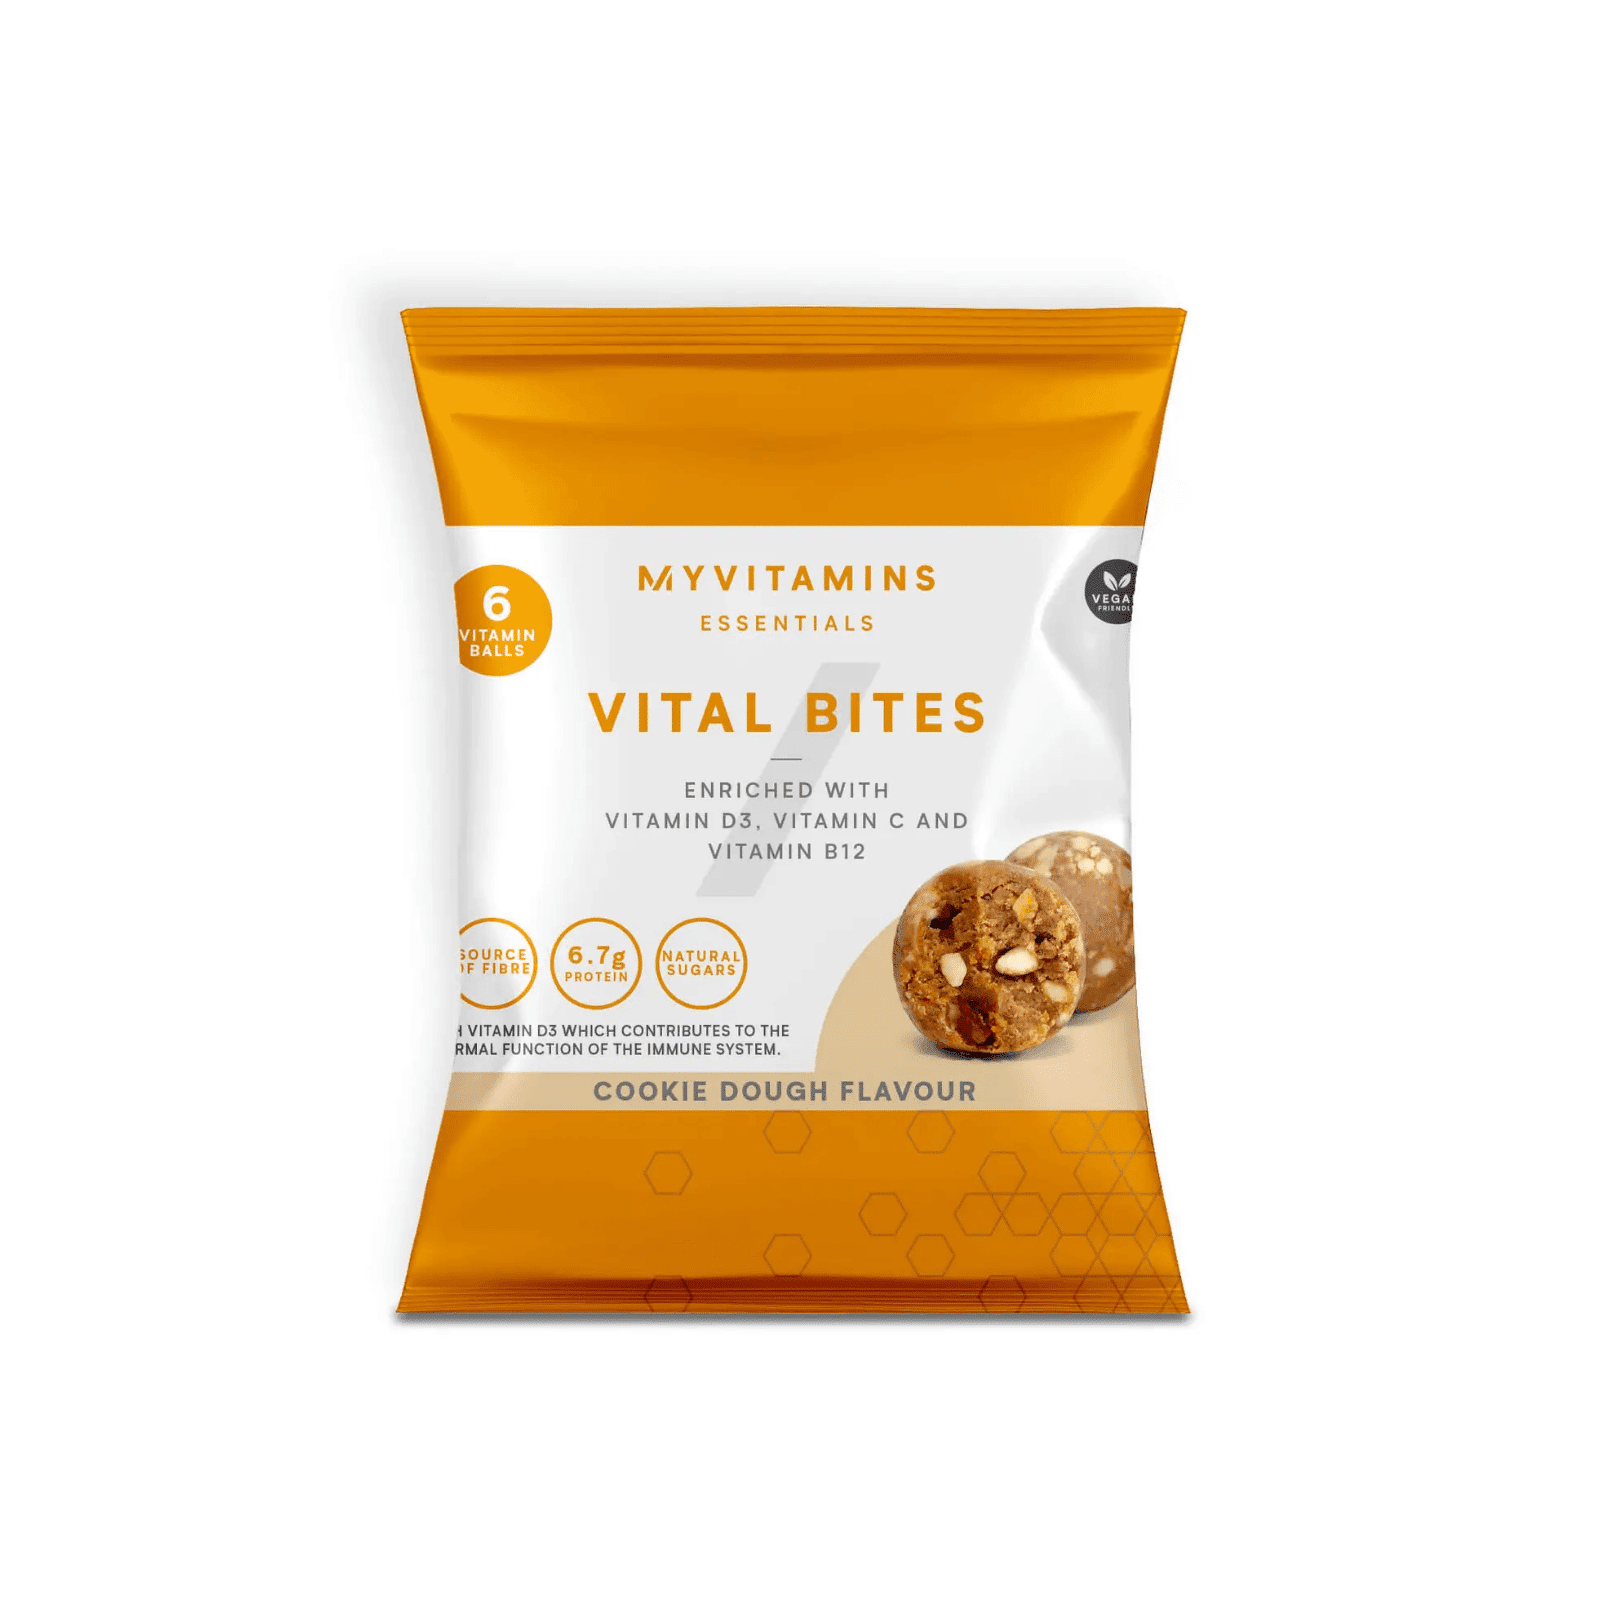 Myvitamins Vital Bites - 45g - Cookie Dough